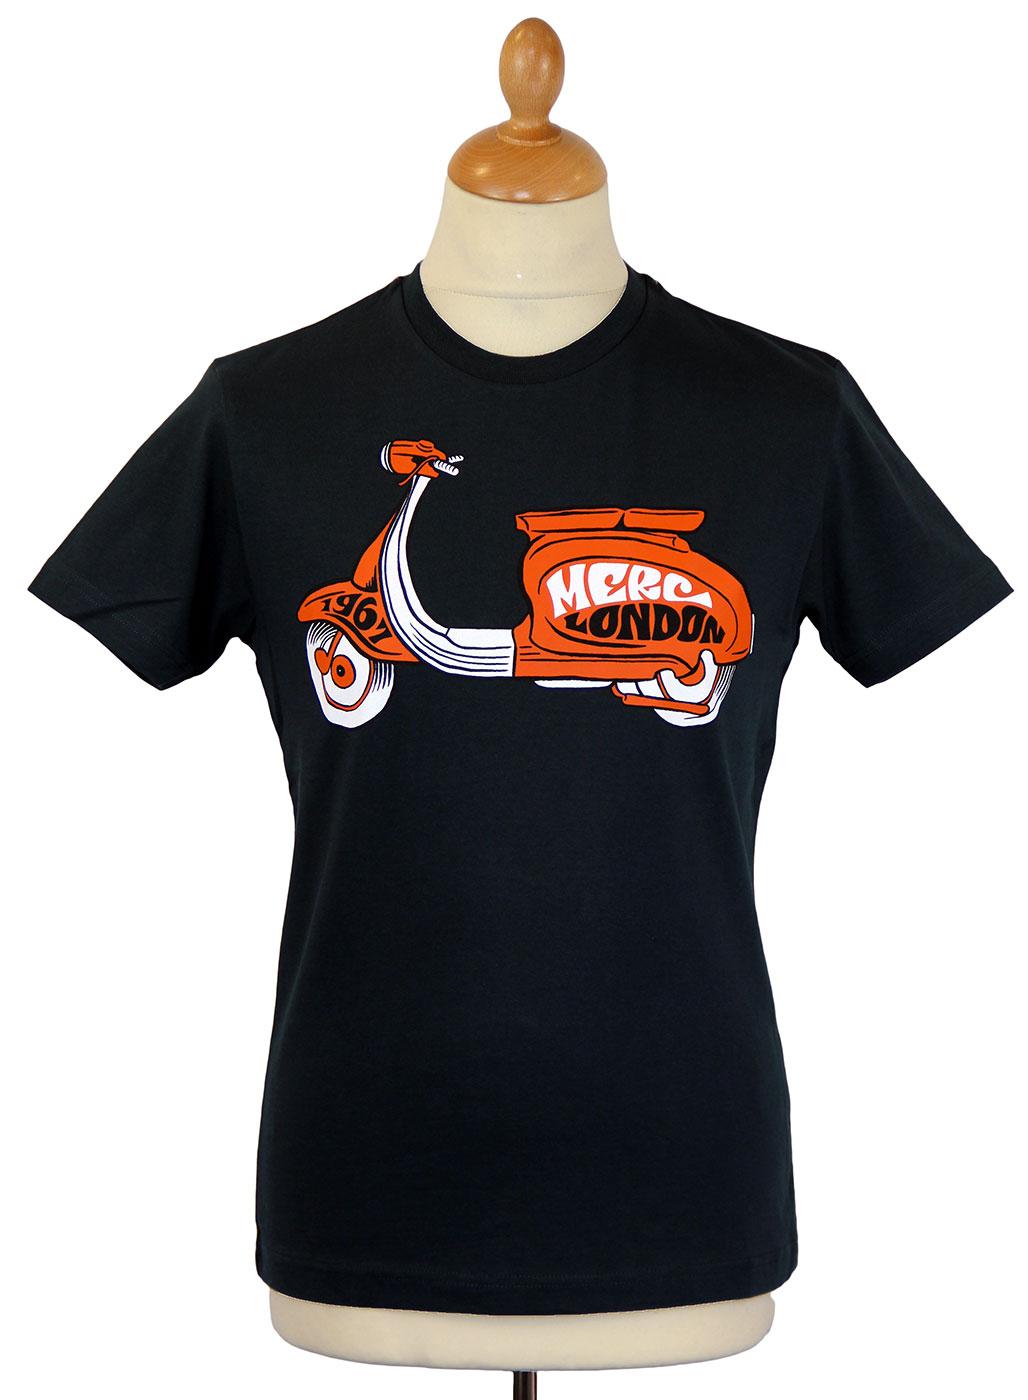 Glasgow MERC Retro Indie Mod Scooter Print T-Shirt